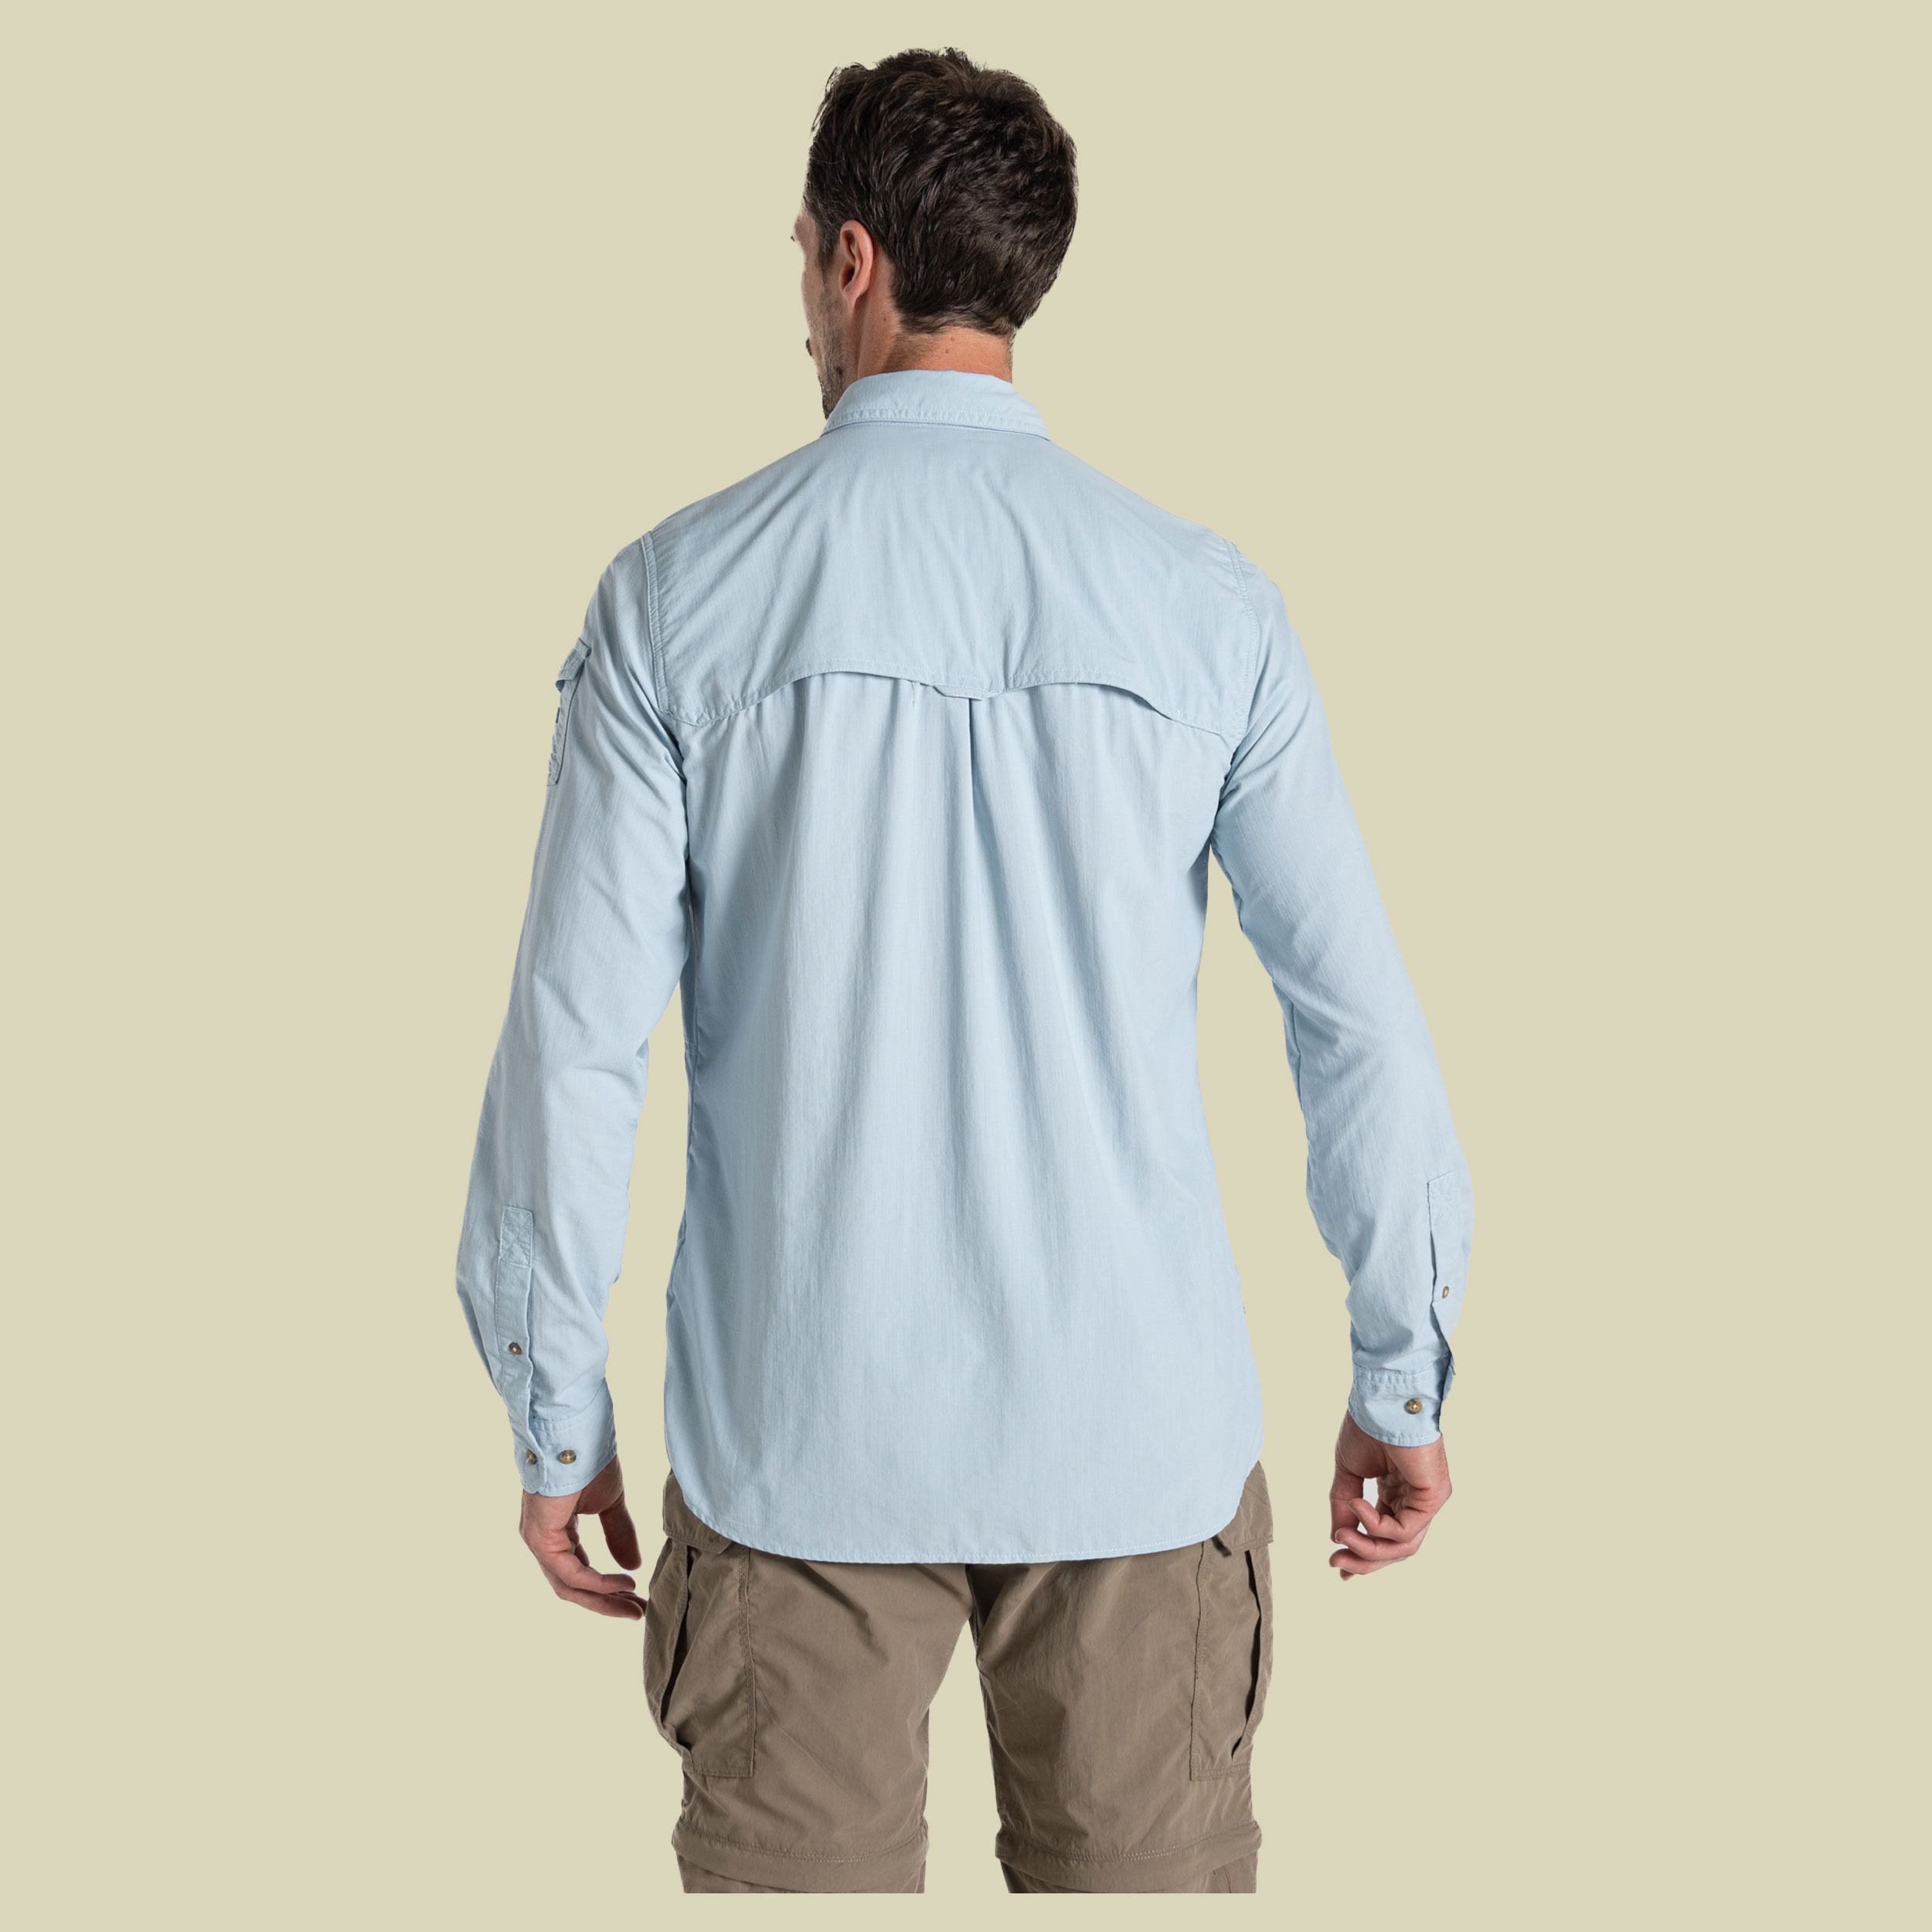 NosiLife Adventure Long Sleeved Shirt III Men L blau - niagra blue